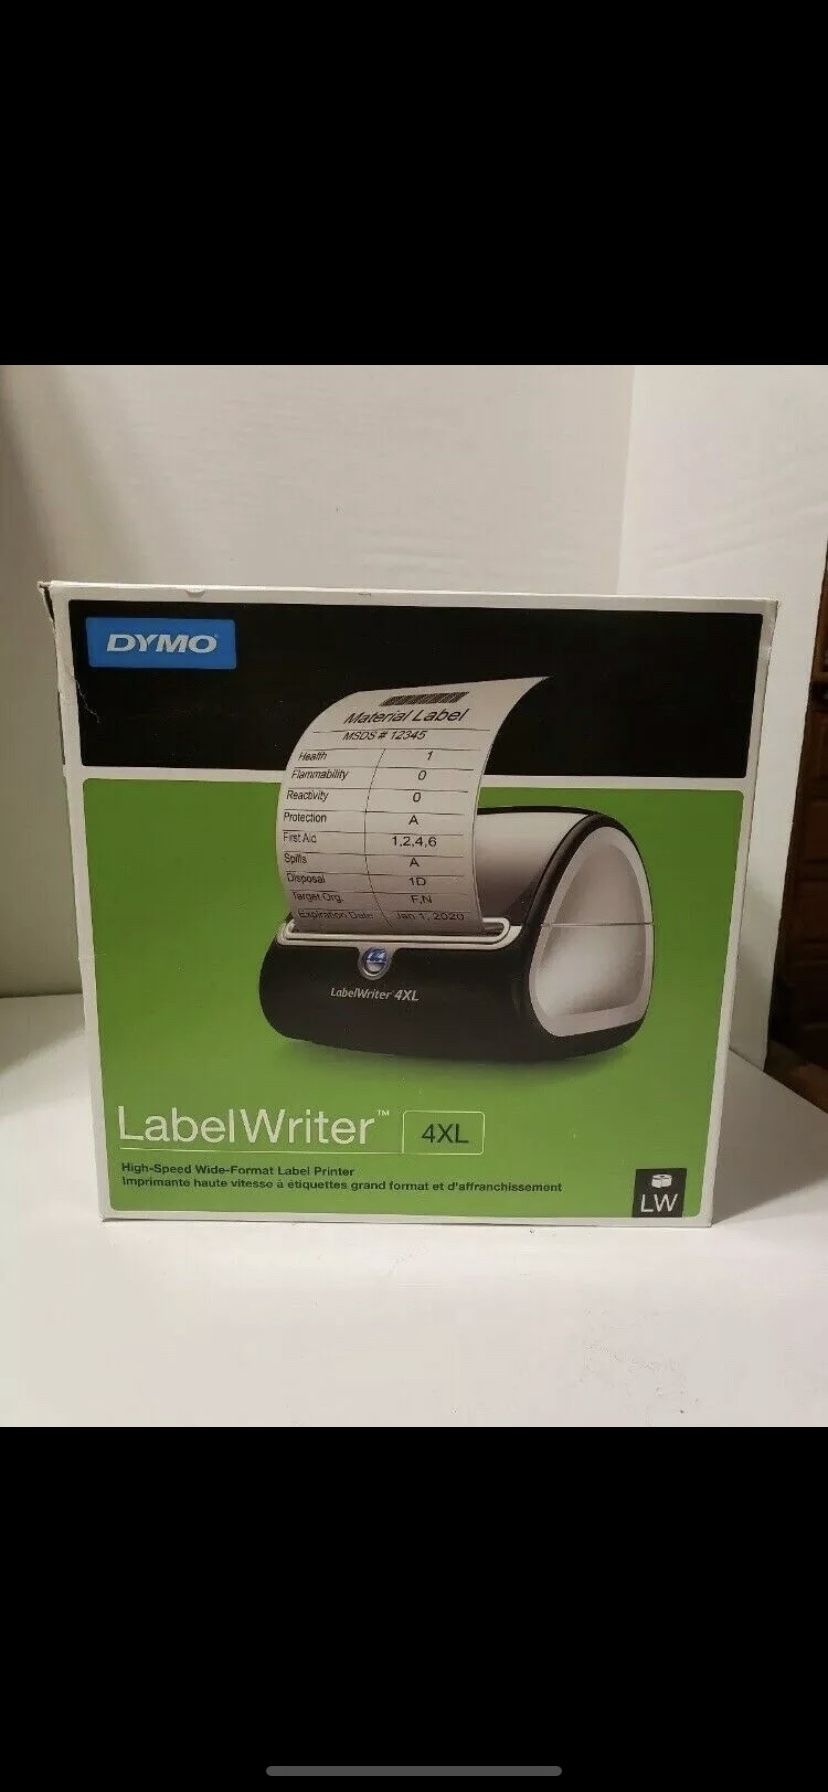 Dymo LabelWriter 4XL Label Thermal Printer - Black (1755120) BRAND NEW IN BOX!!